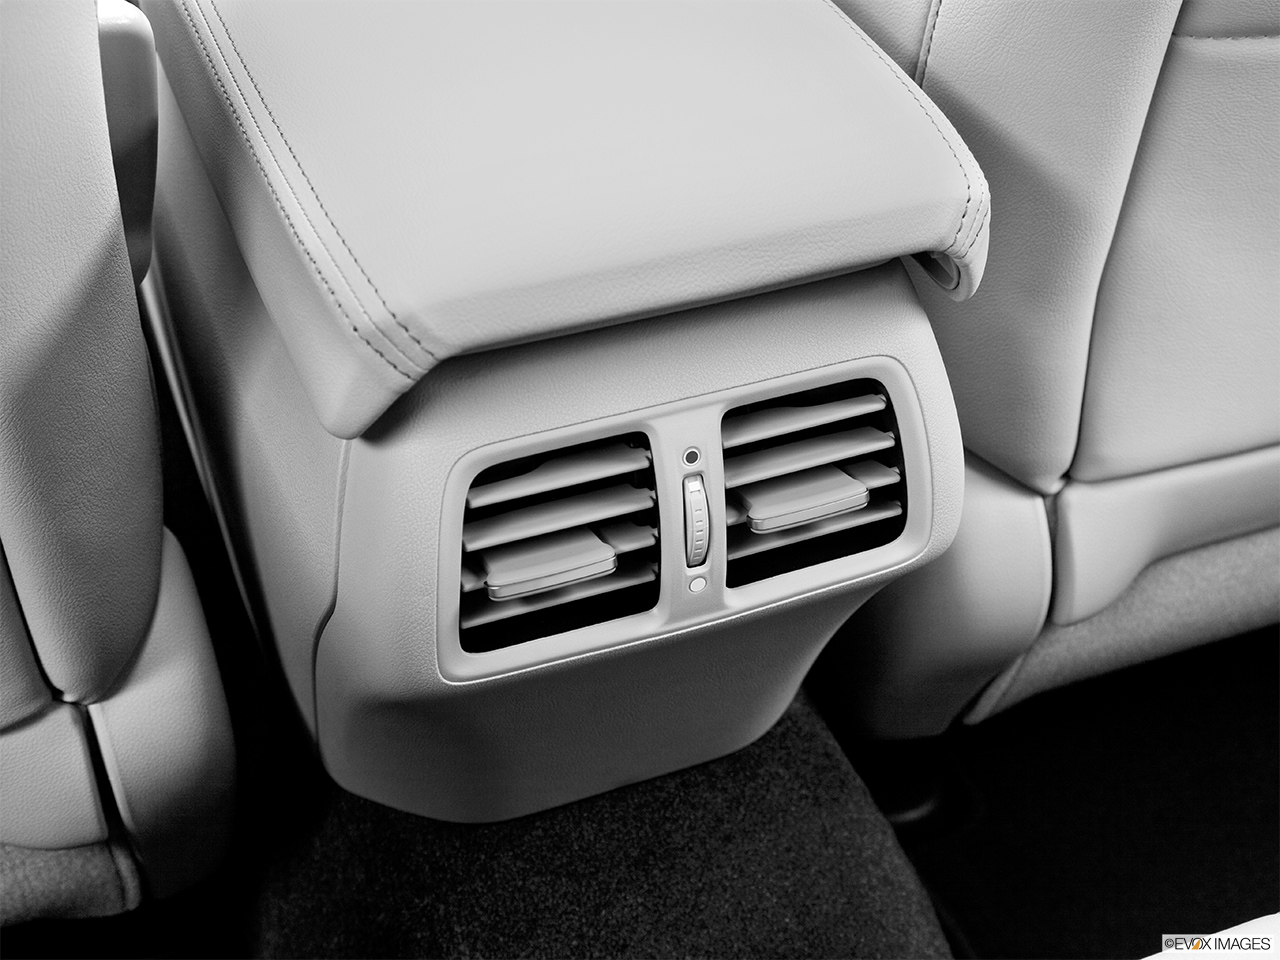 2013 Acura TSX Sport Wagon Base Rear A/C controls. 